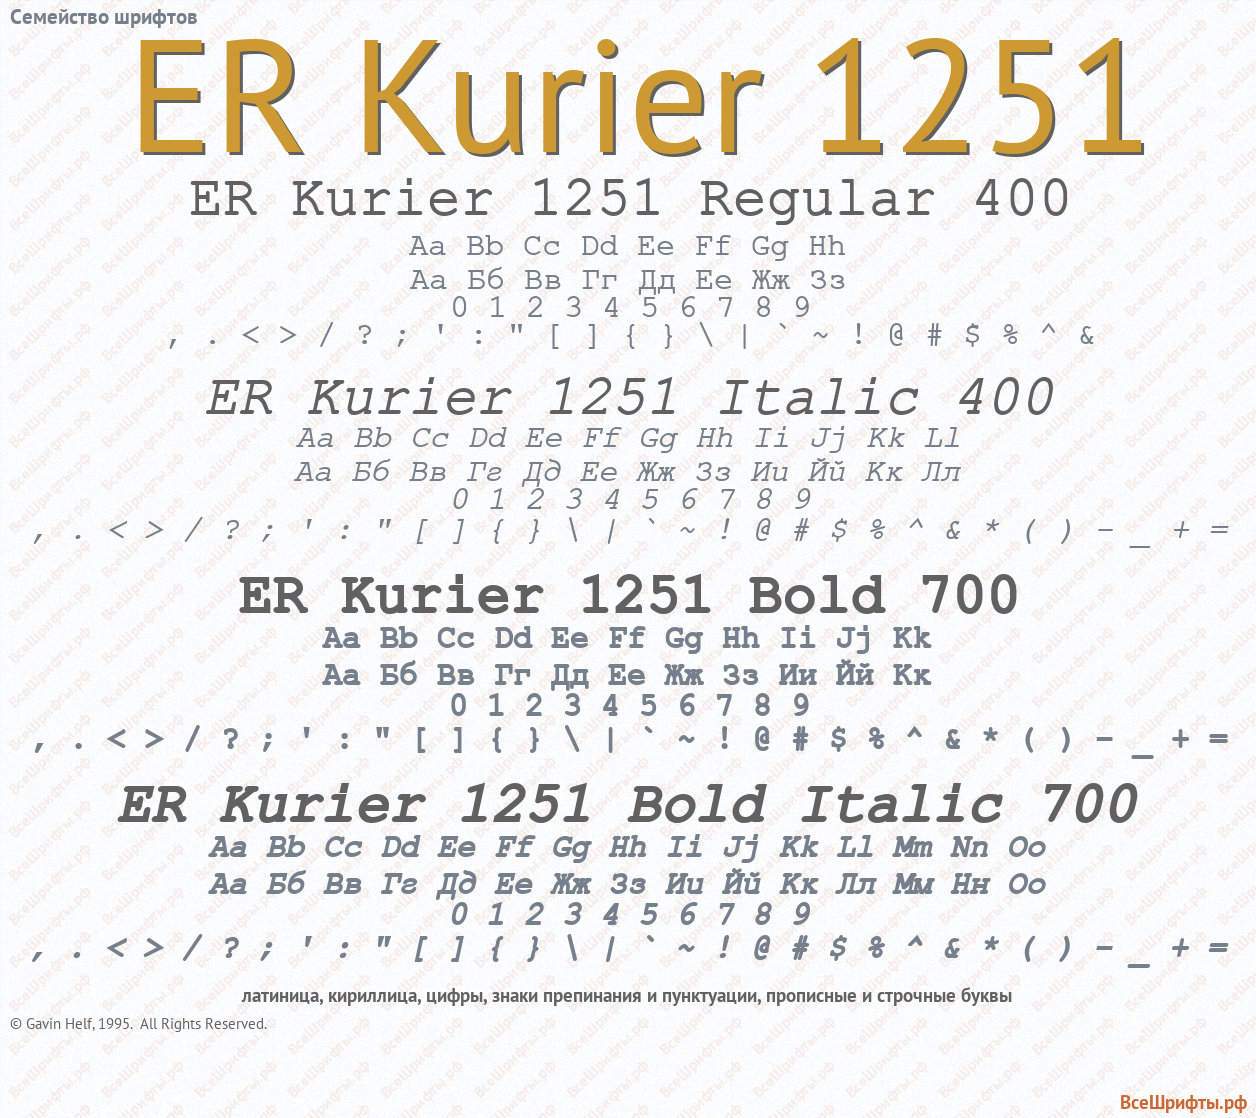 Семейство шрифтов ER Kurier 1251